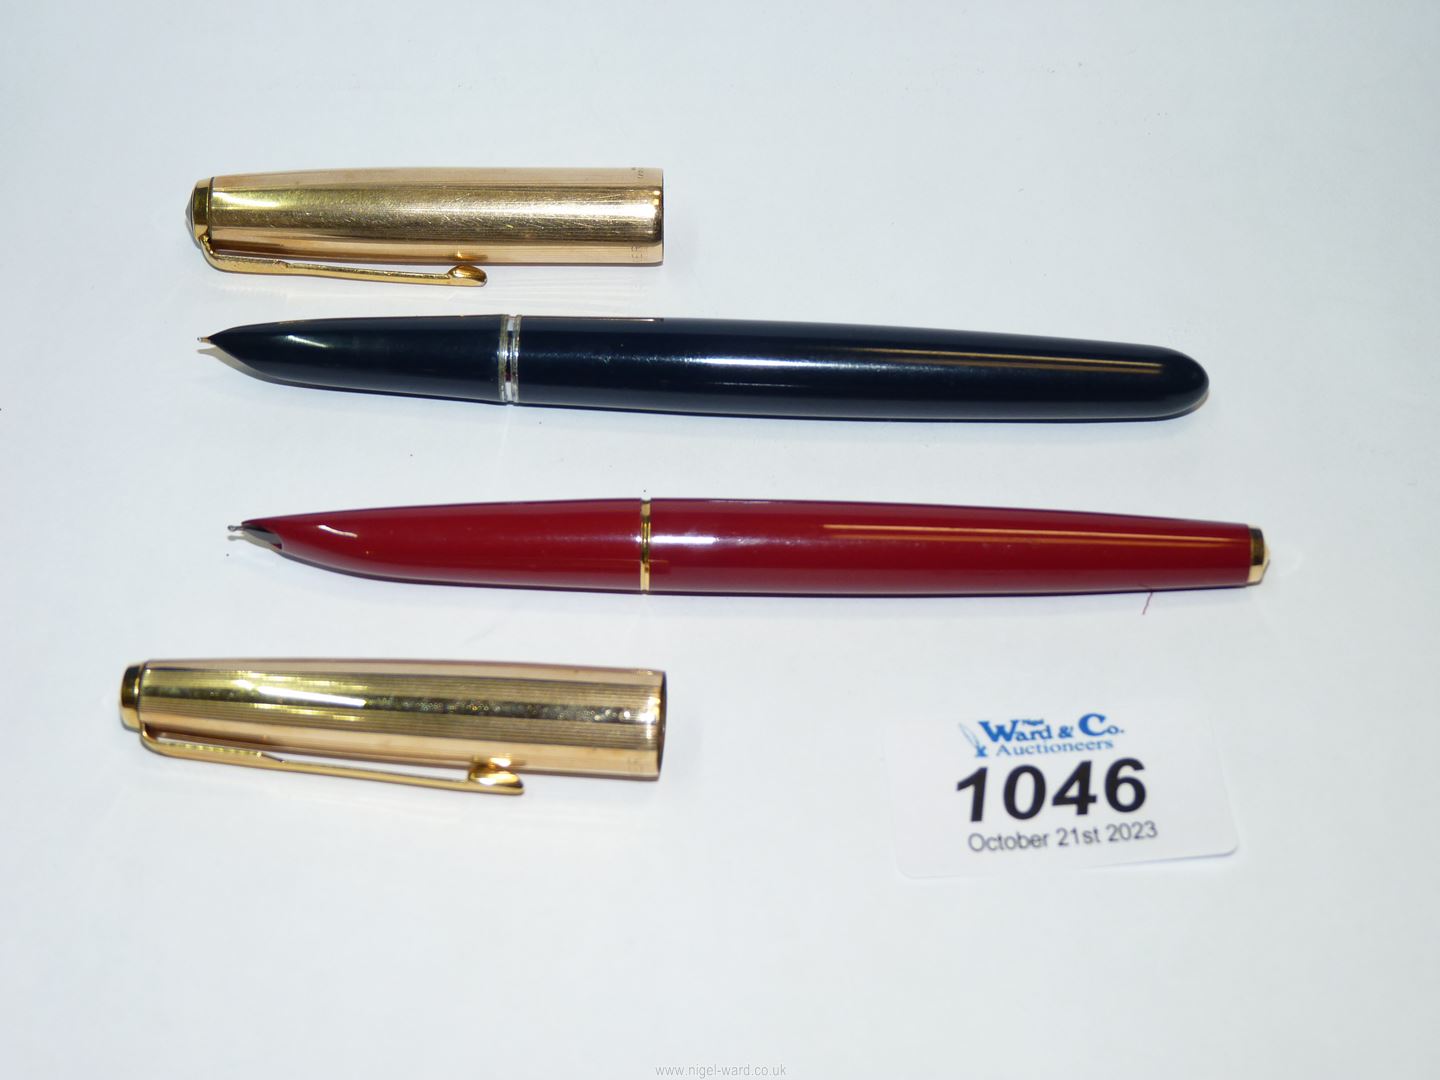 A black Parker 51 fountain pen and a burgundy Parker 61 fountain pen,